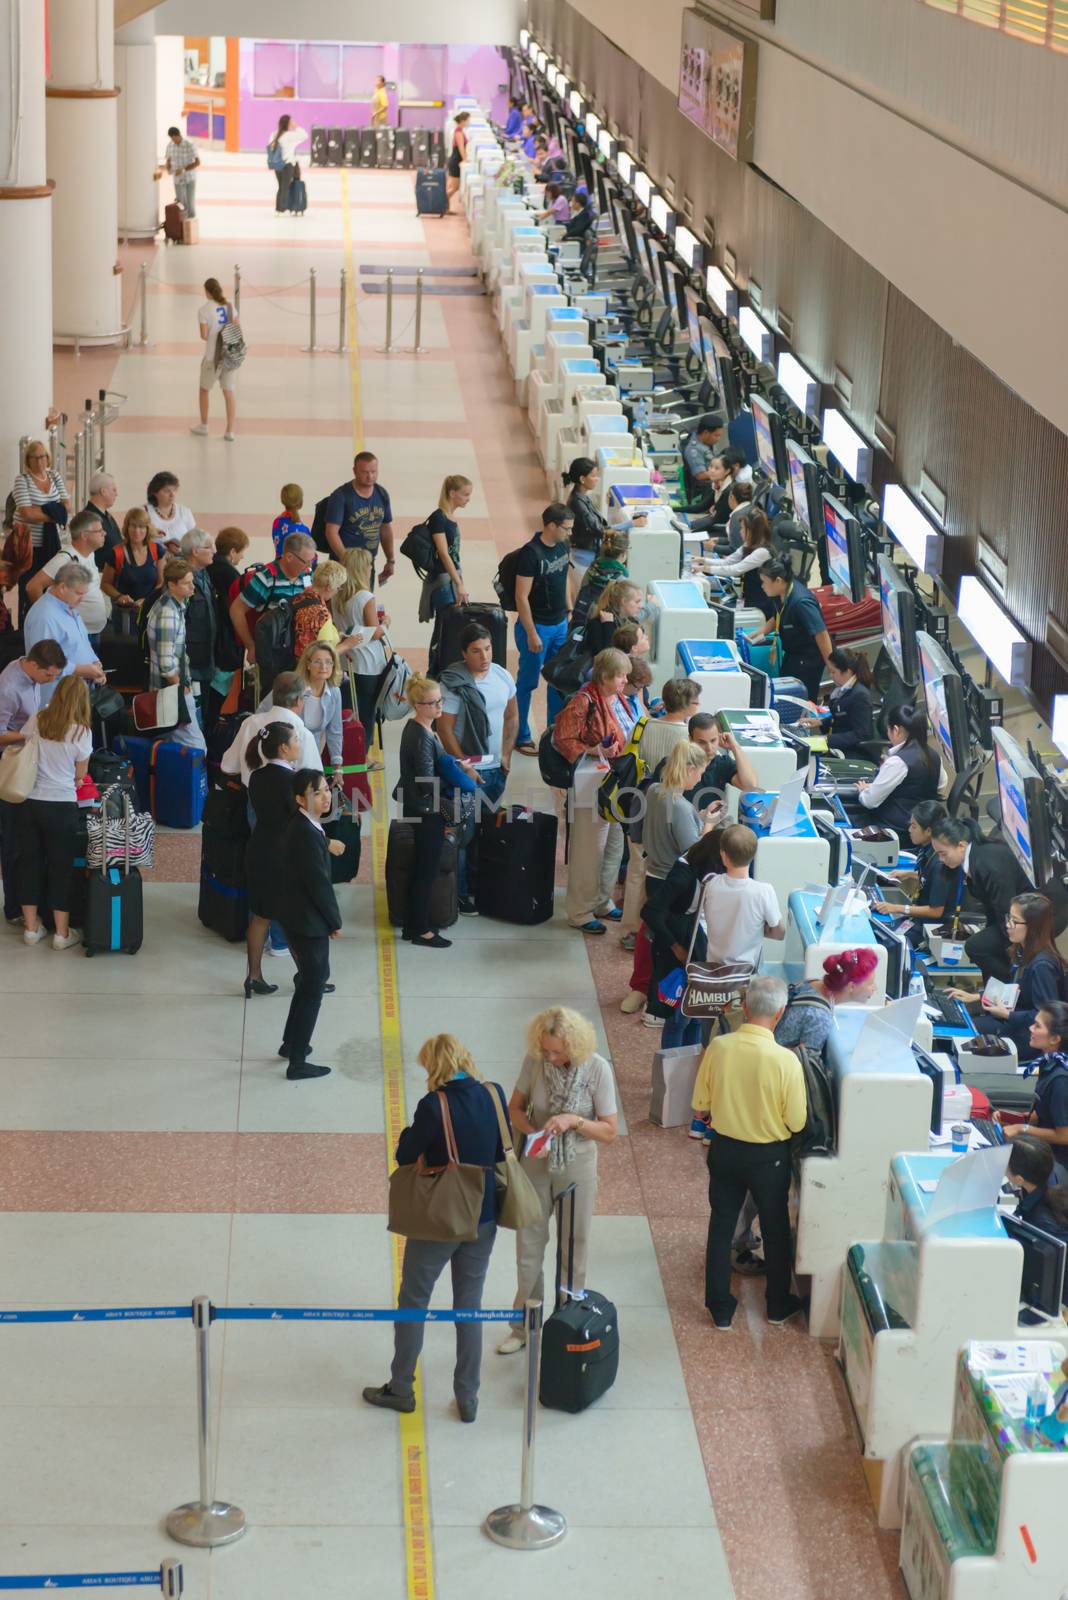 PHUKET, THAILAND - 21 NOV 2013: Passenger queue near check-in desks in Phuket international airport